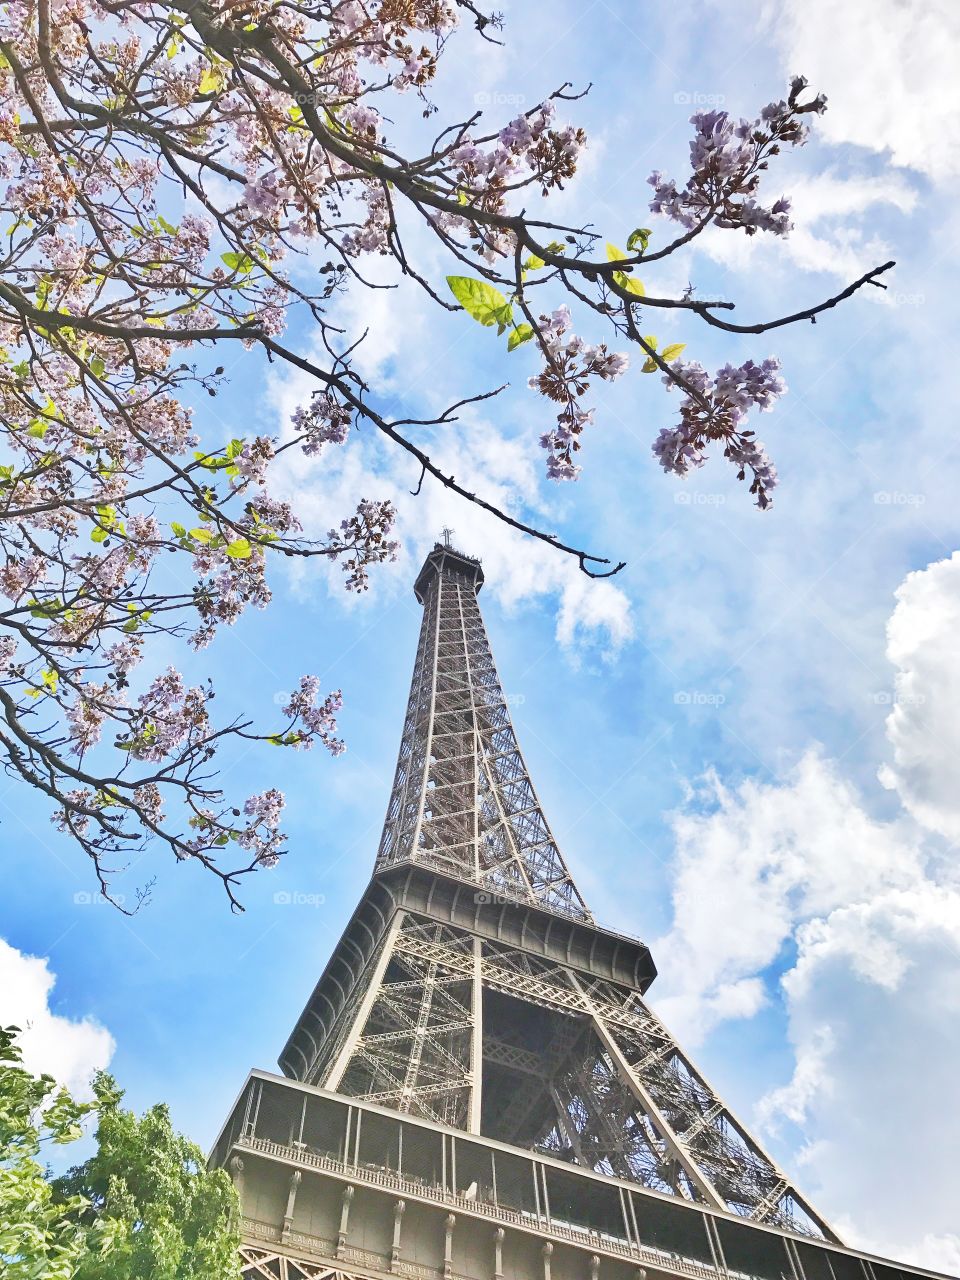 Eiffel Tower in Paris, France 